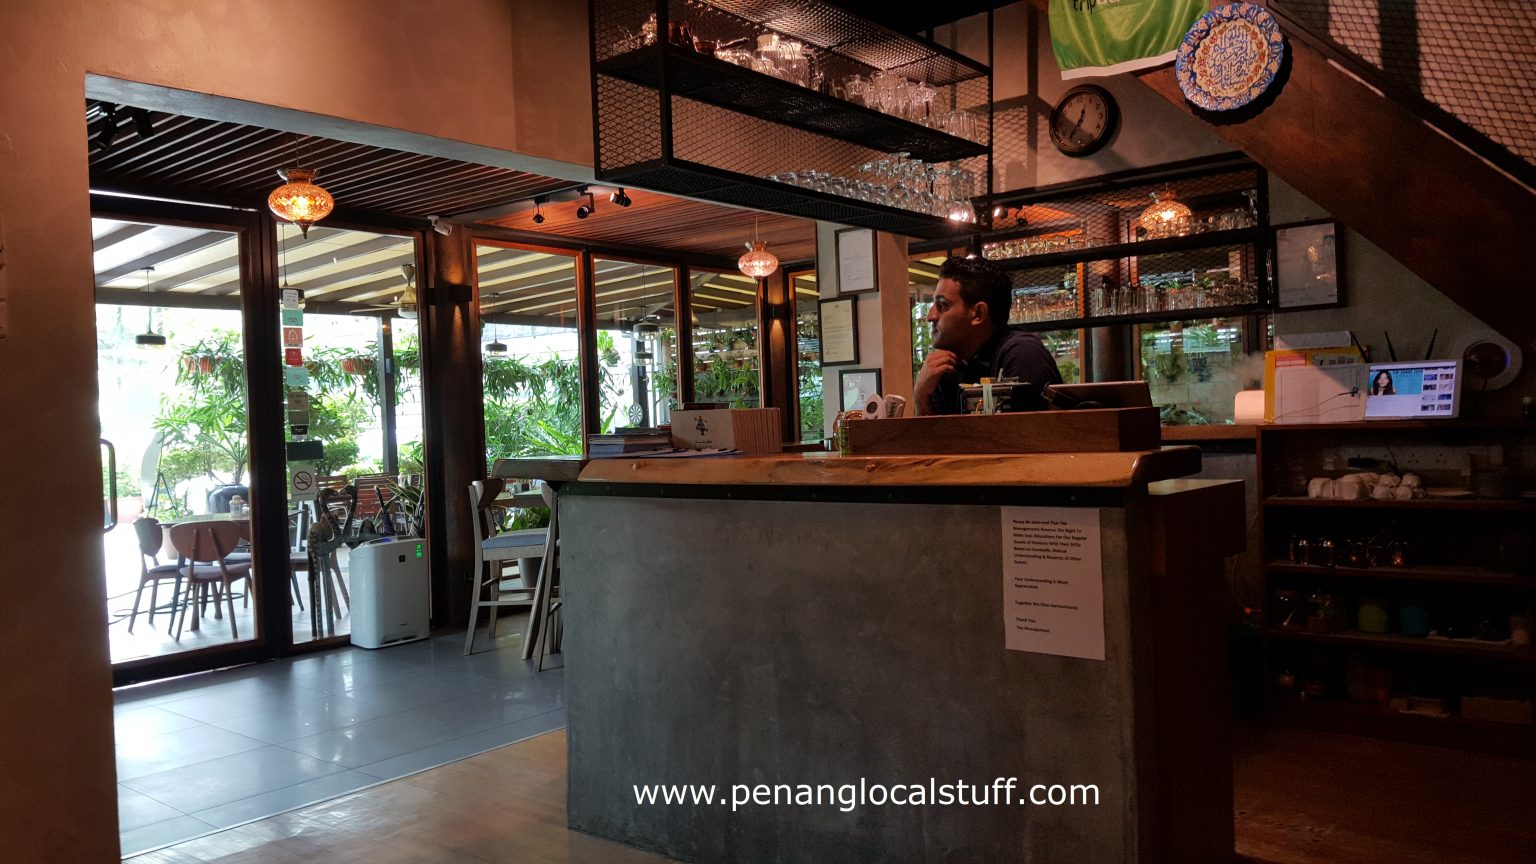 The Garden Lebanon Restaurant, Tanjung Bungah, Penang - Penang Local Stuff